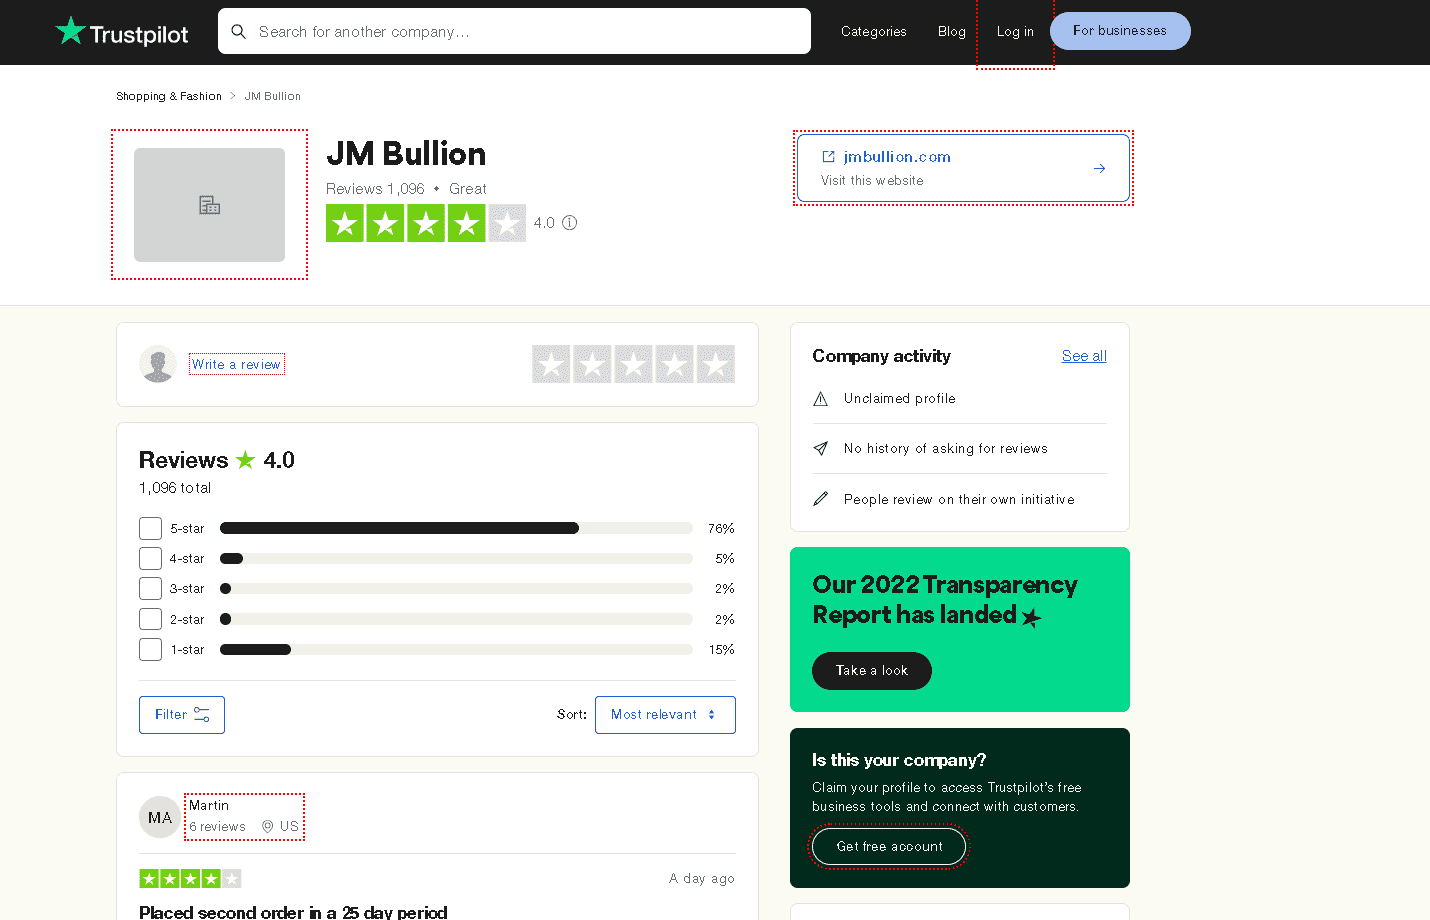 JM Bullion Trustpilot profile and customer reviews